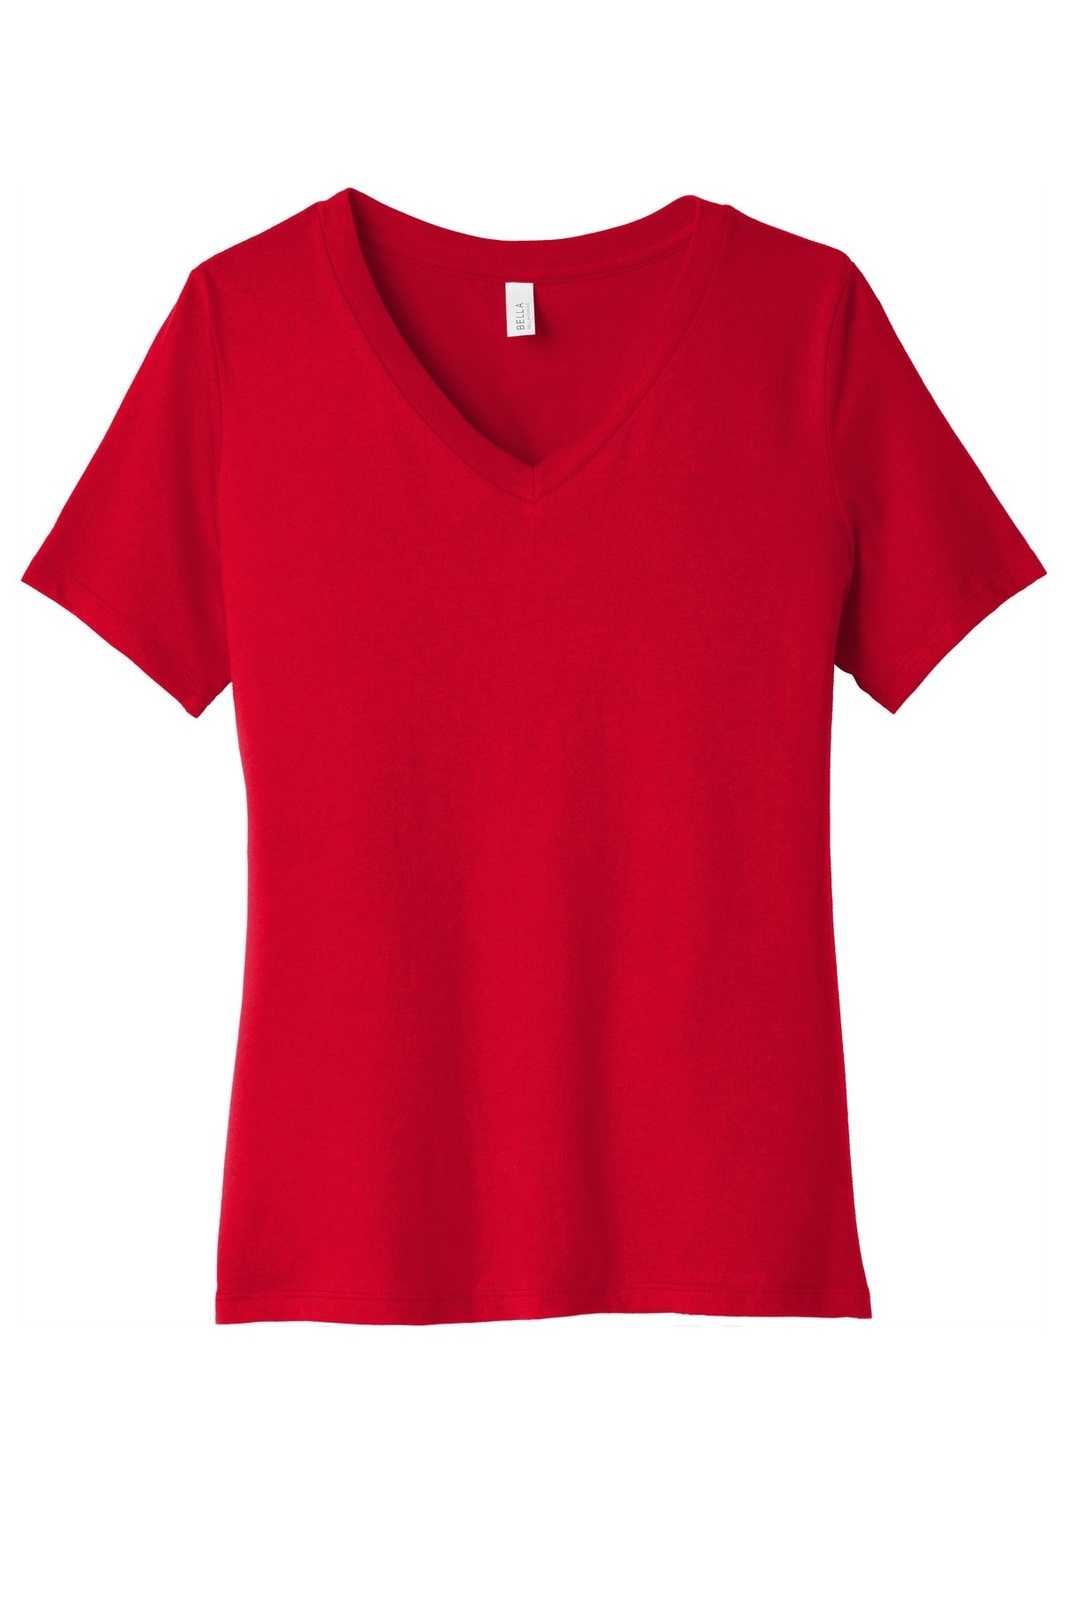 XL Gear For Sports Louisville Cardinals black woman t-shirt v-neck short  sleeves